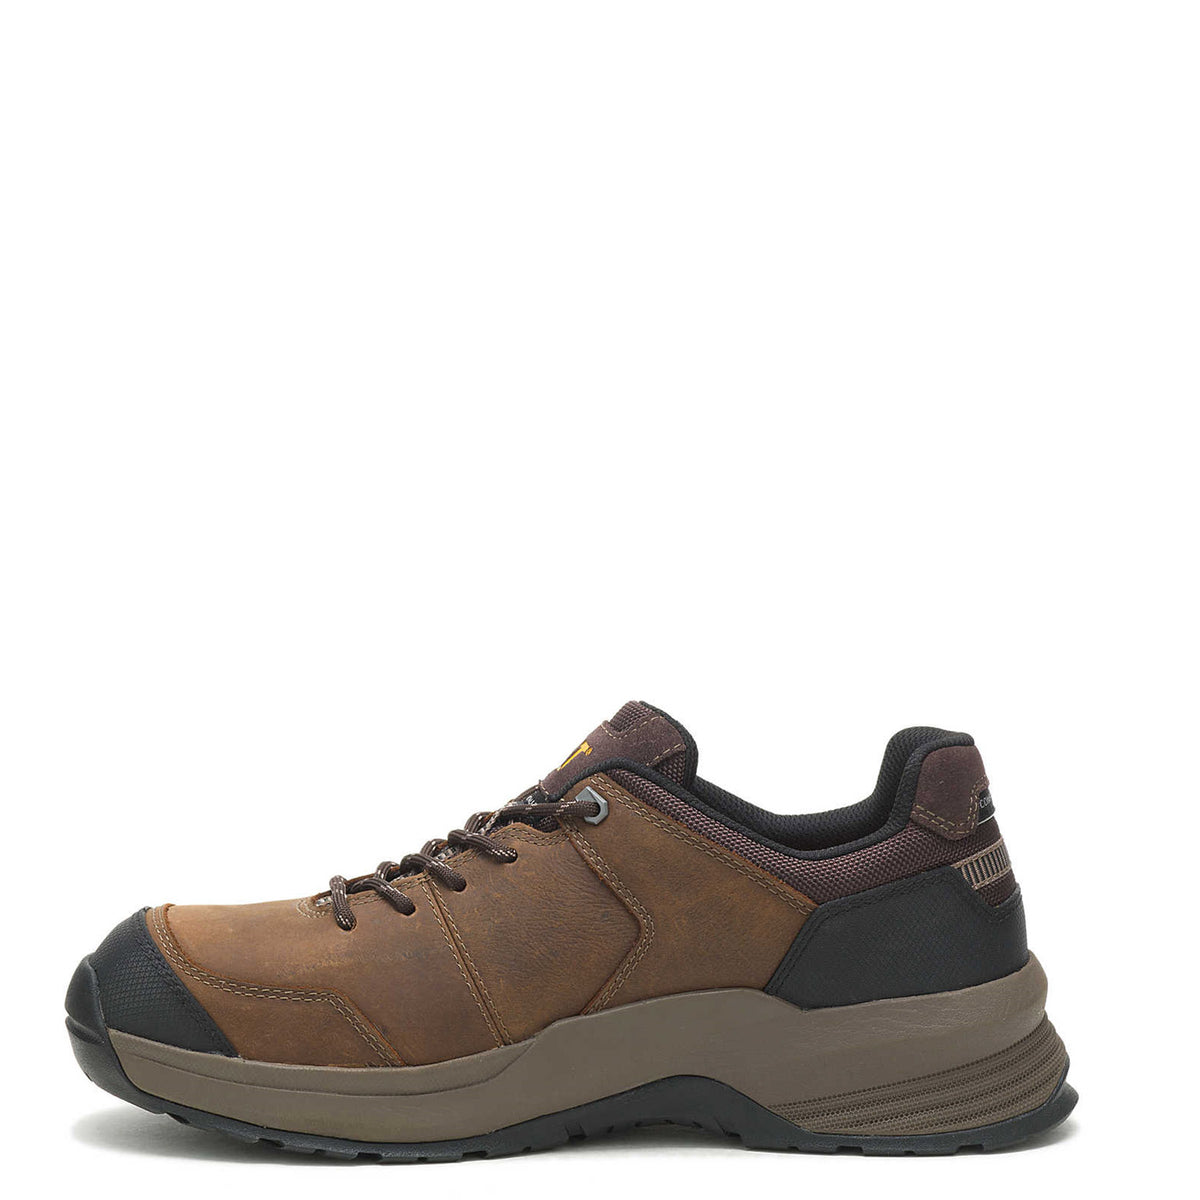 CAT Streamline 2.0 EH CT Leather Work Shoe - Work World - Workwear, Work Boots, Safety Gear